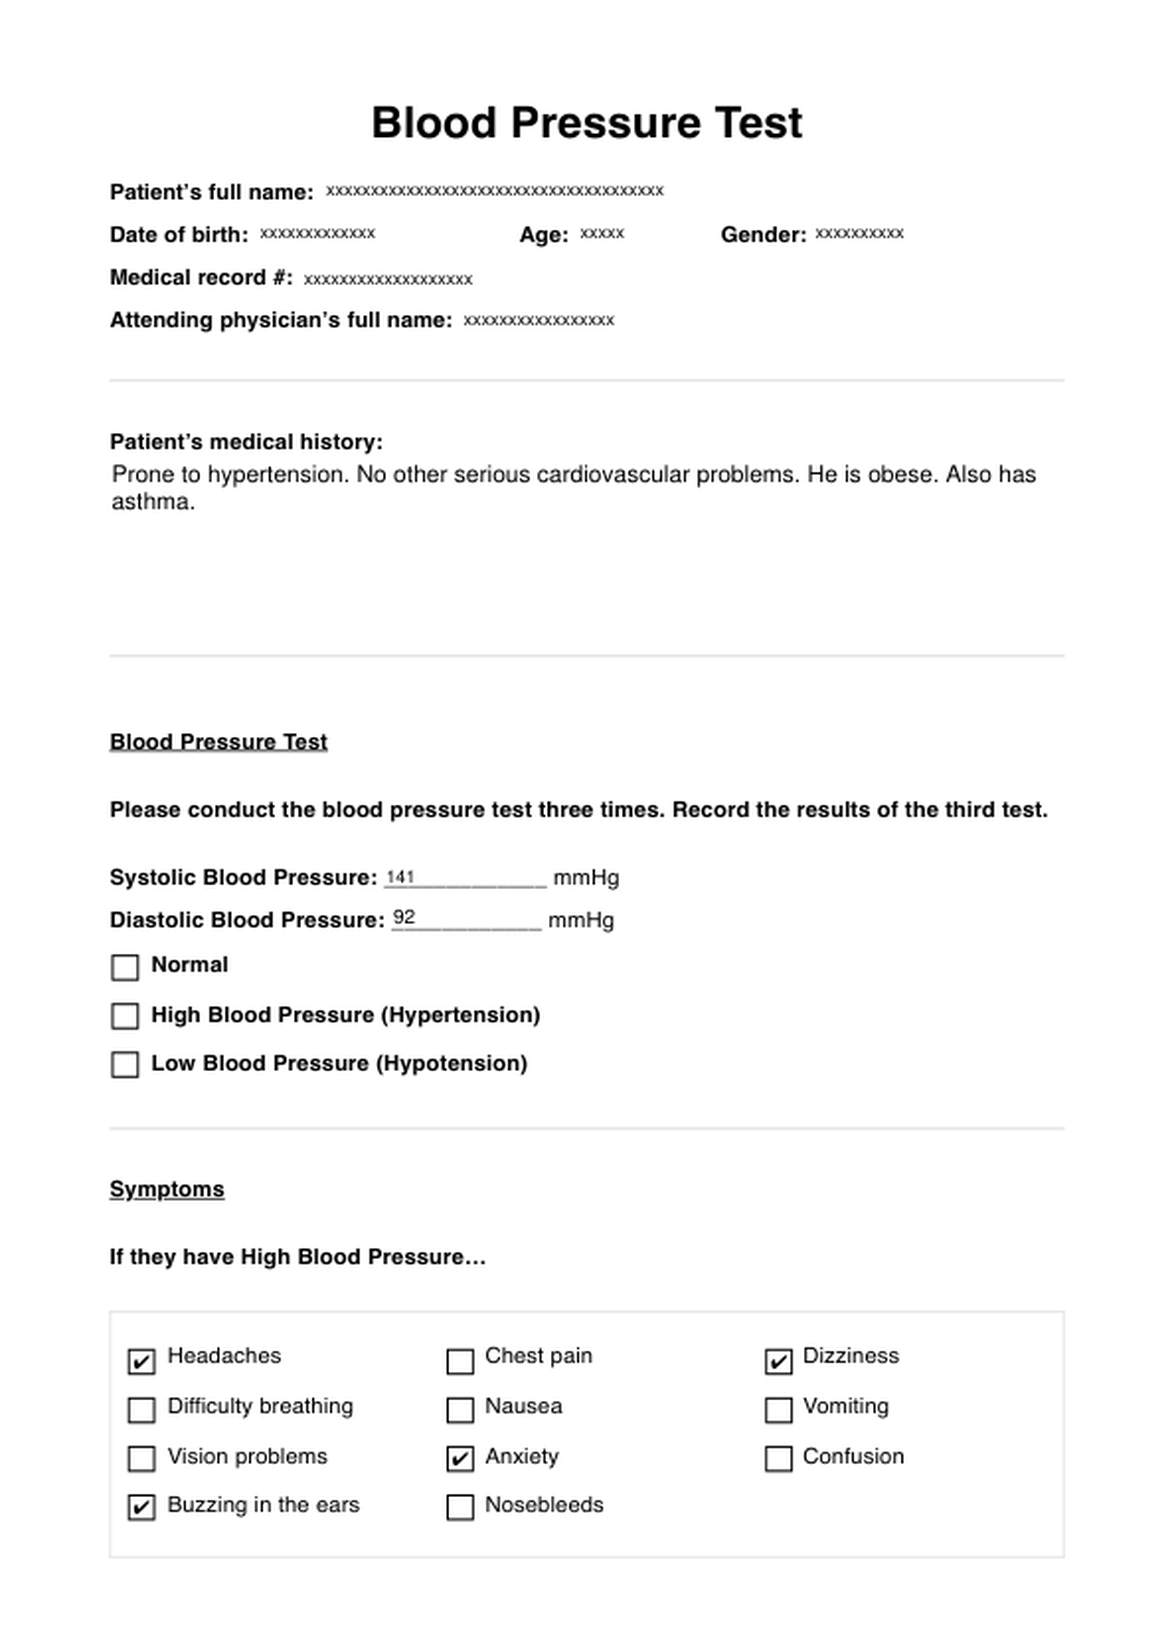 Blood Pressure Test PDF Example